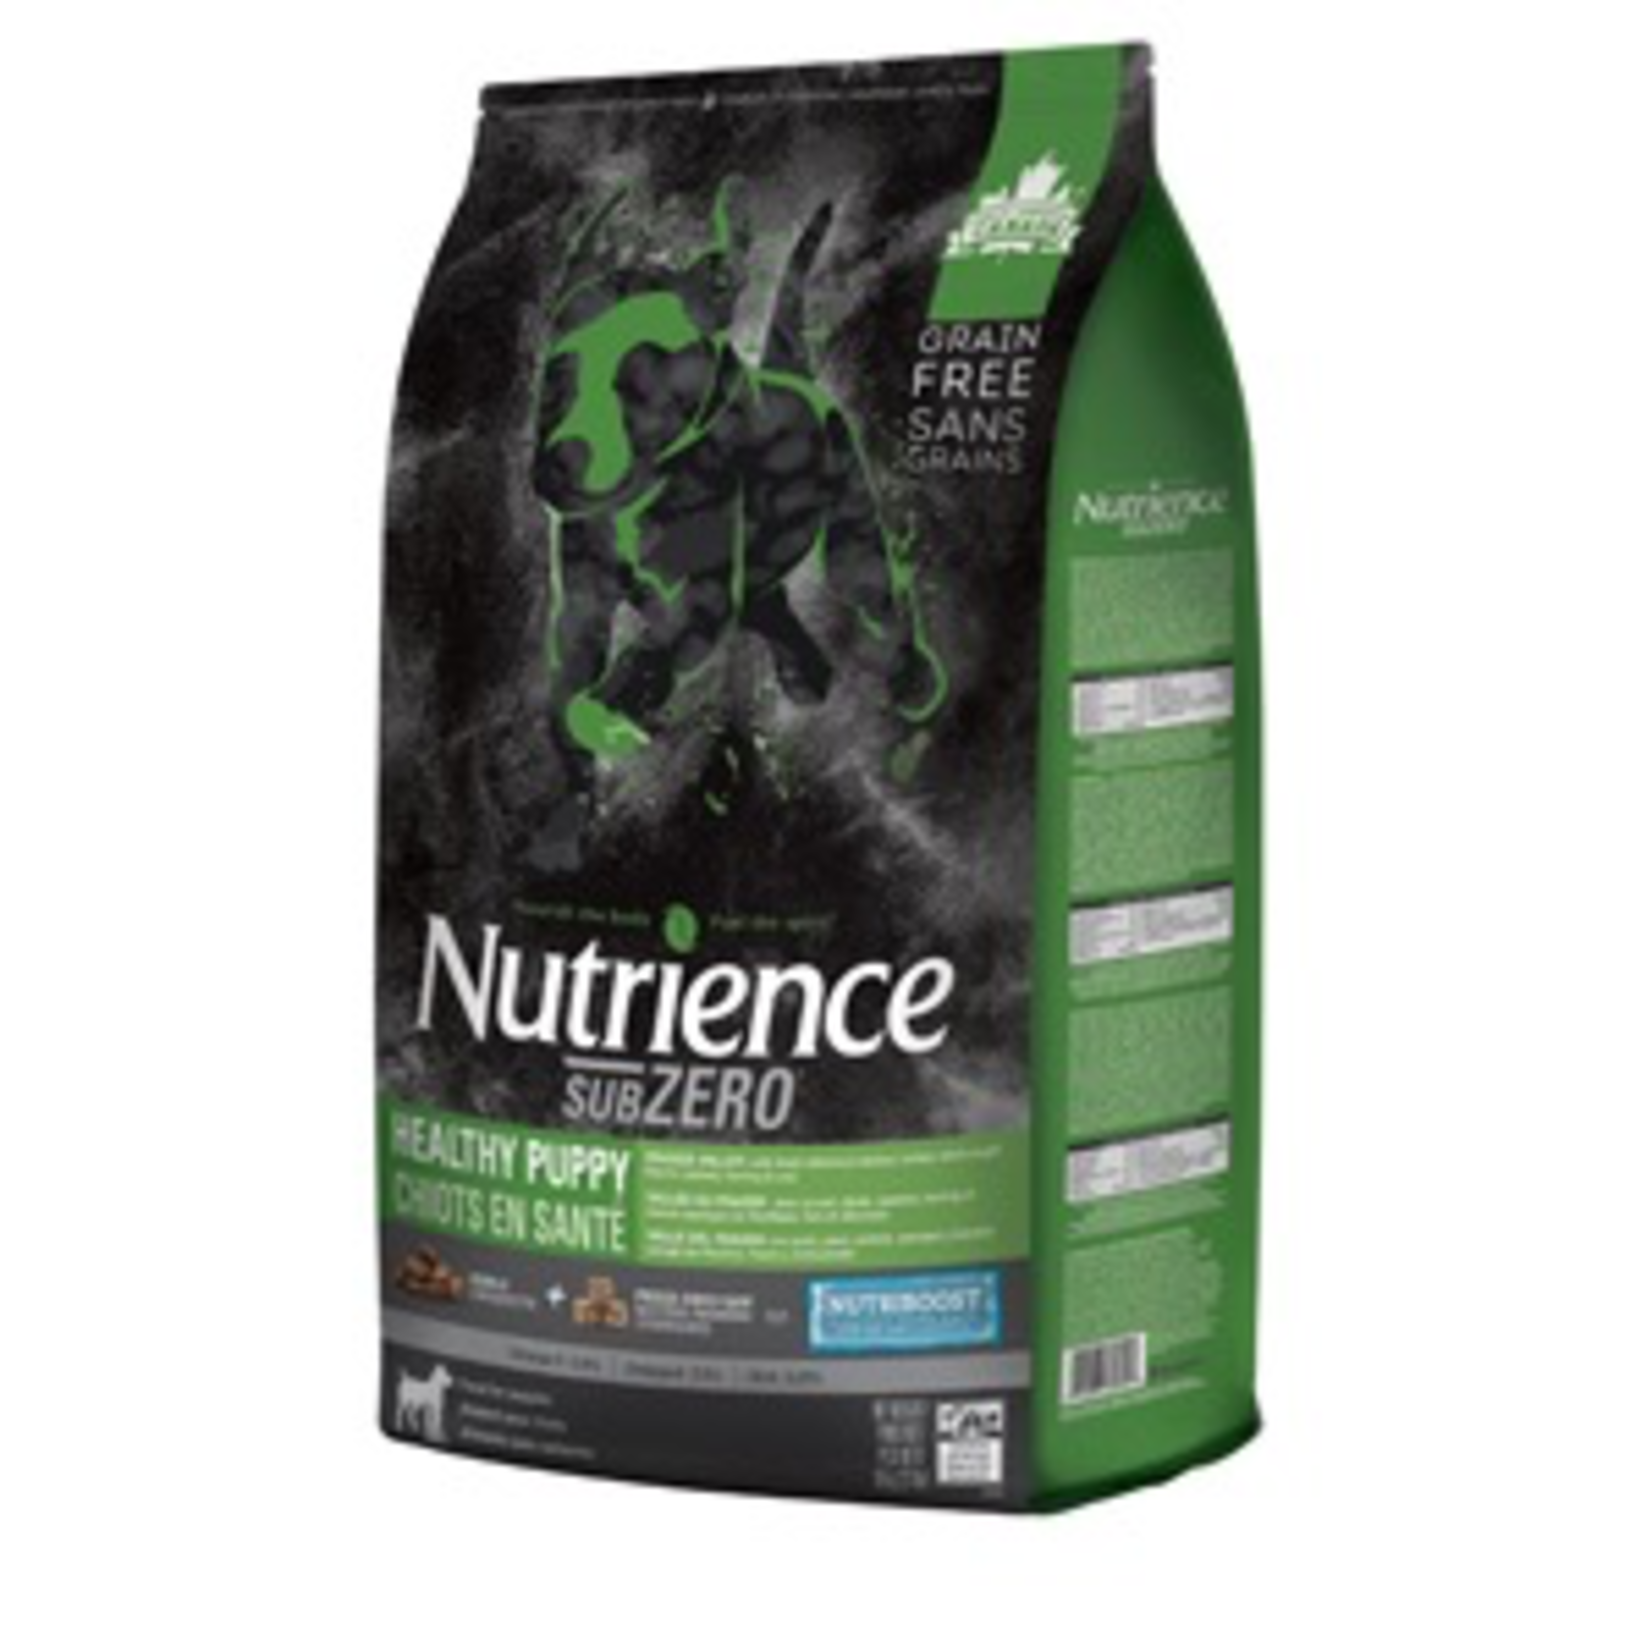 NUTRIENCE Nutrience Subzero Healthy Puppy - Fraser Valley - 10 kg (22 lbs)